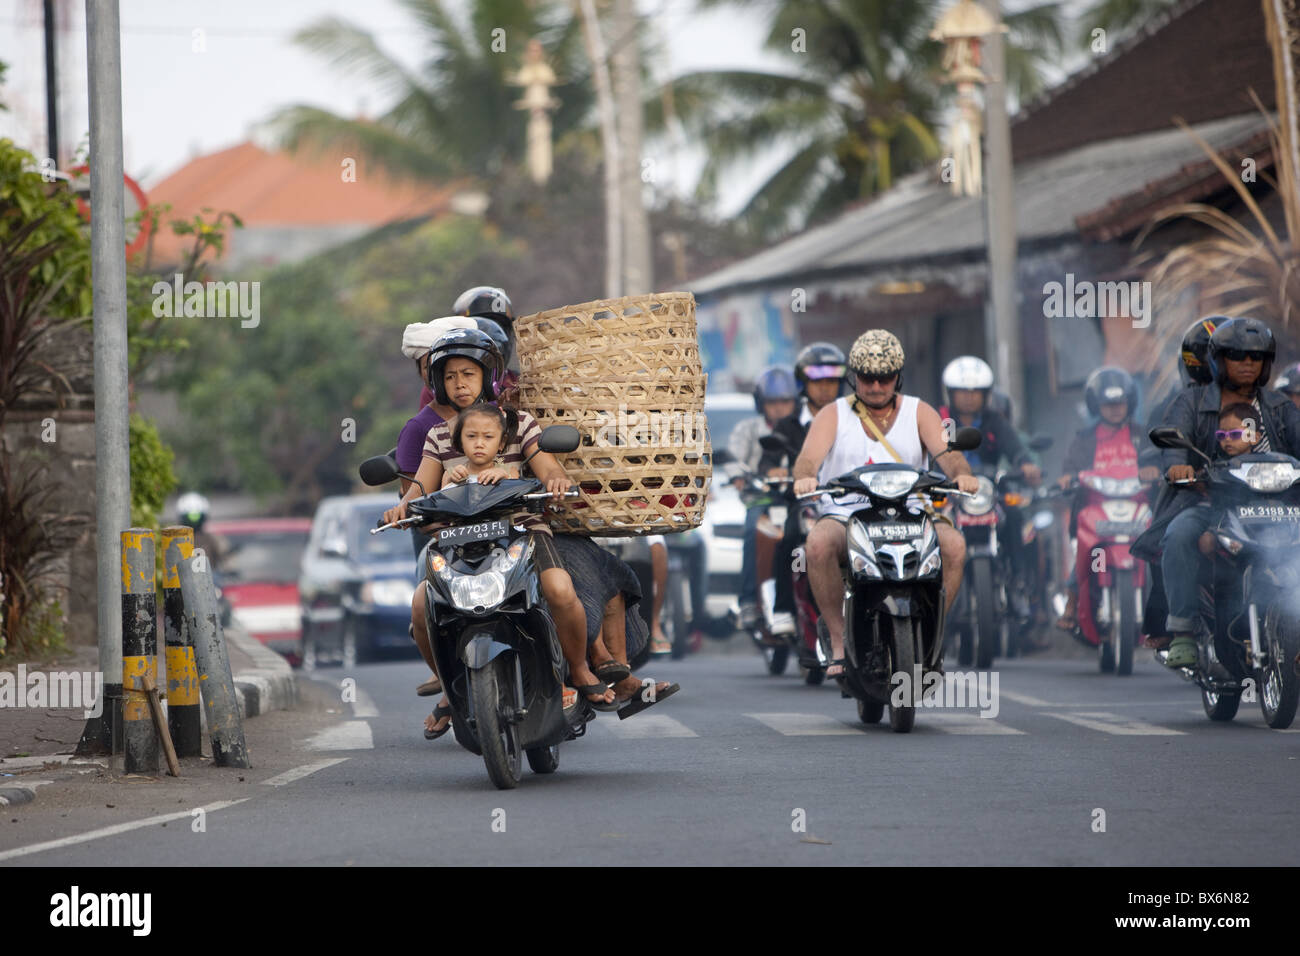 Motor cycles in traffic, Kuta, Bali, Indonesia, Southeast Asia, Asia Stock Photo